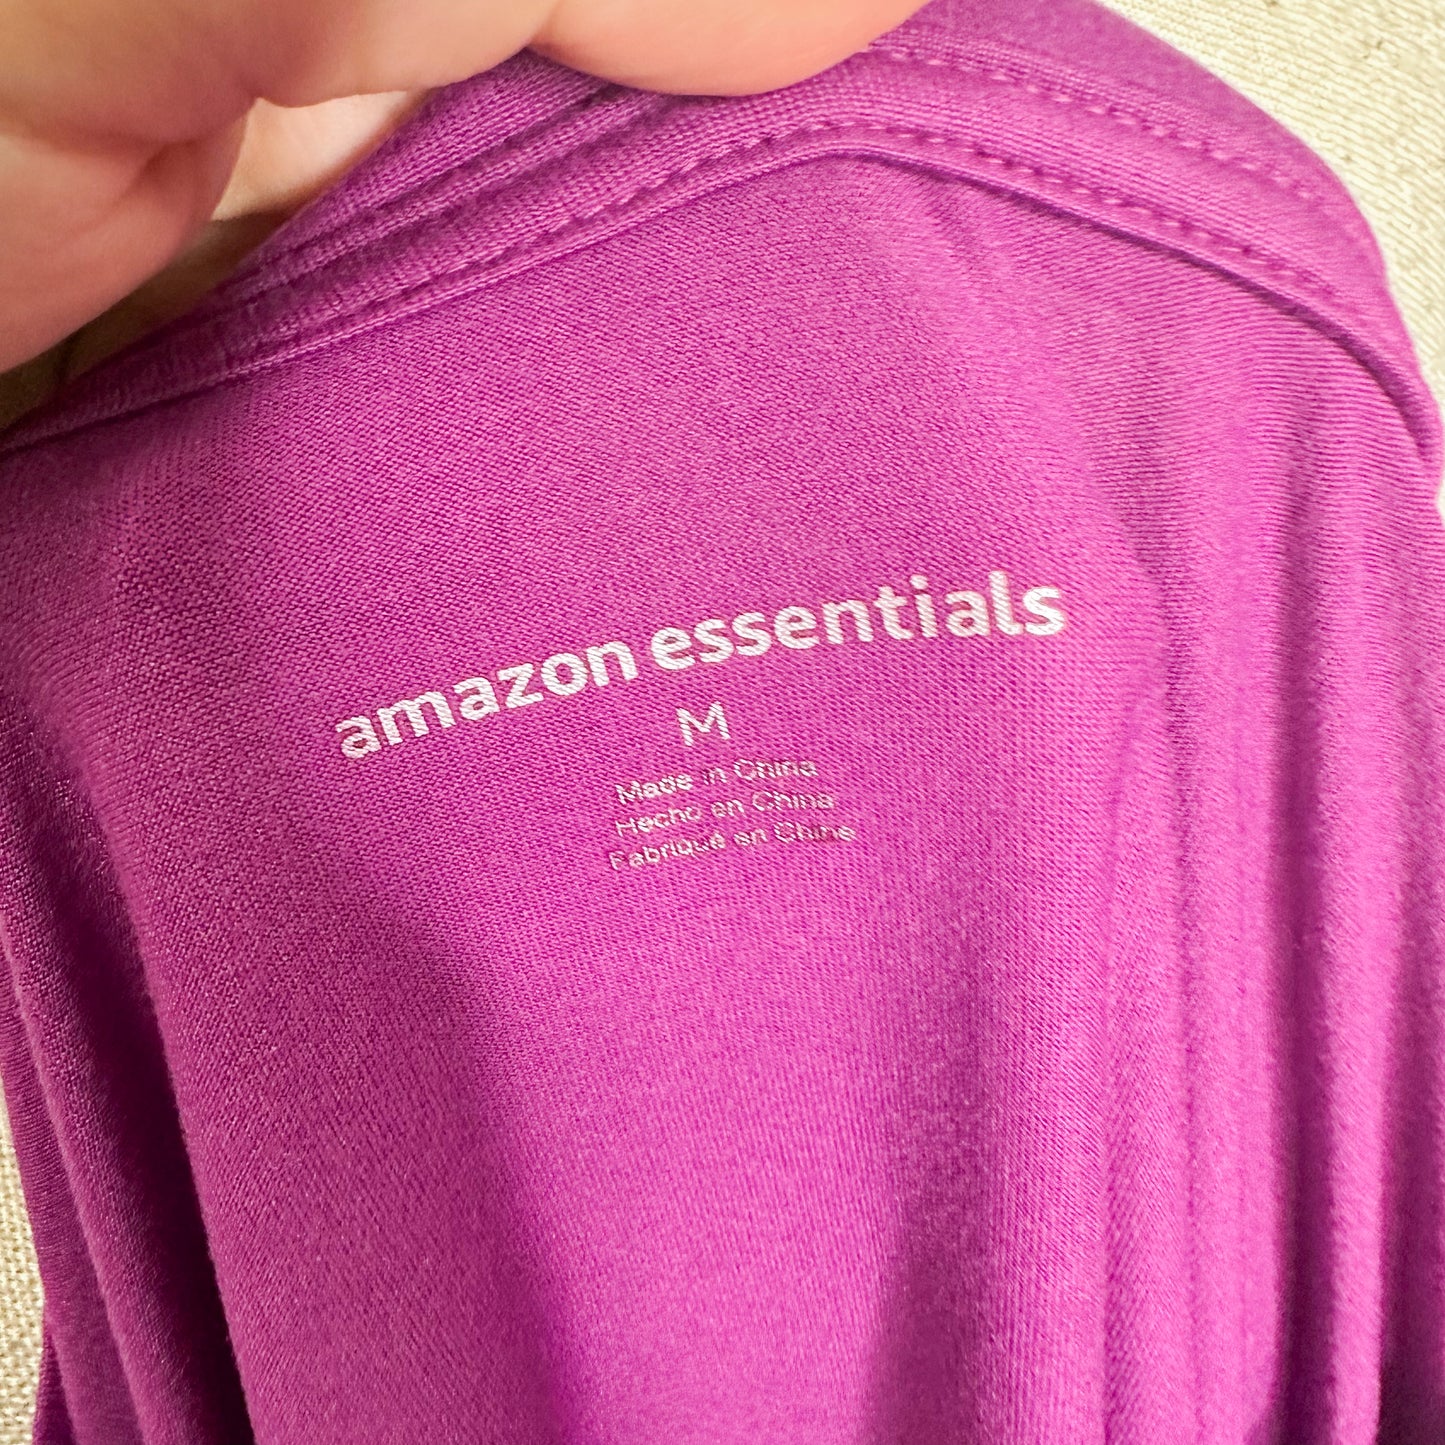 Amazon Essentials New Purple Long Sleeve Top Size Medium